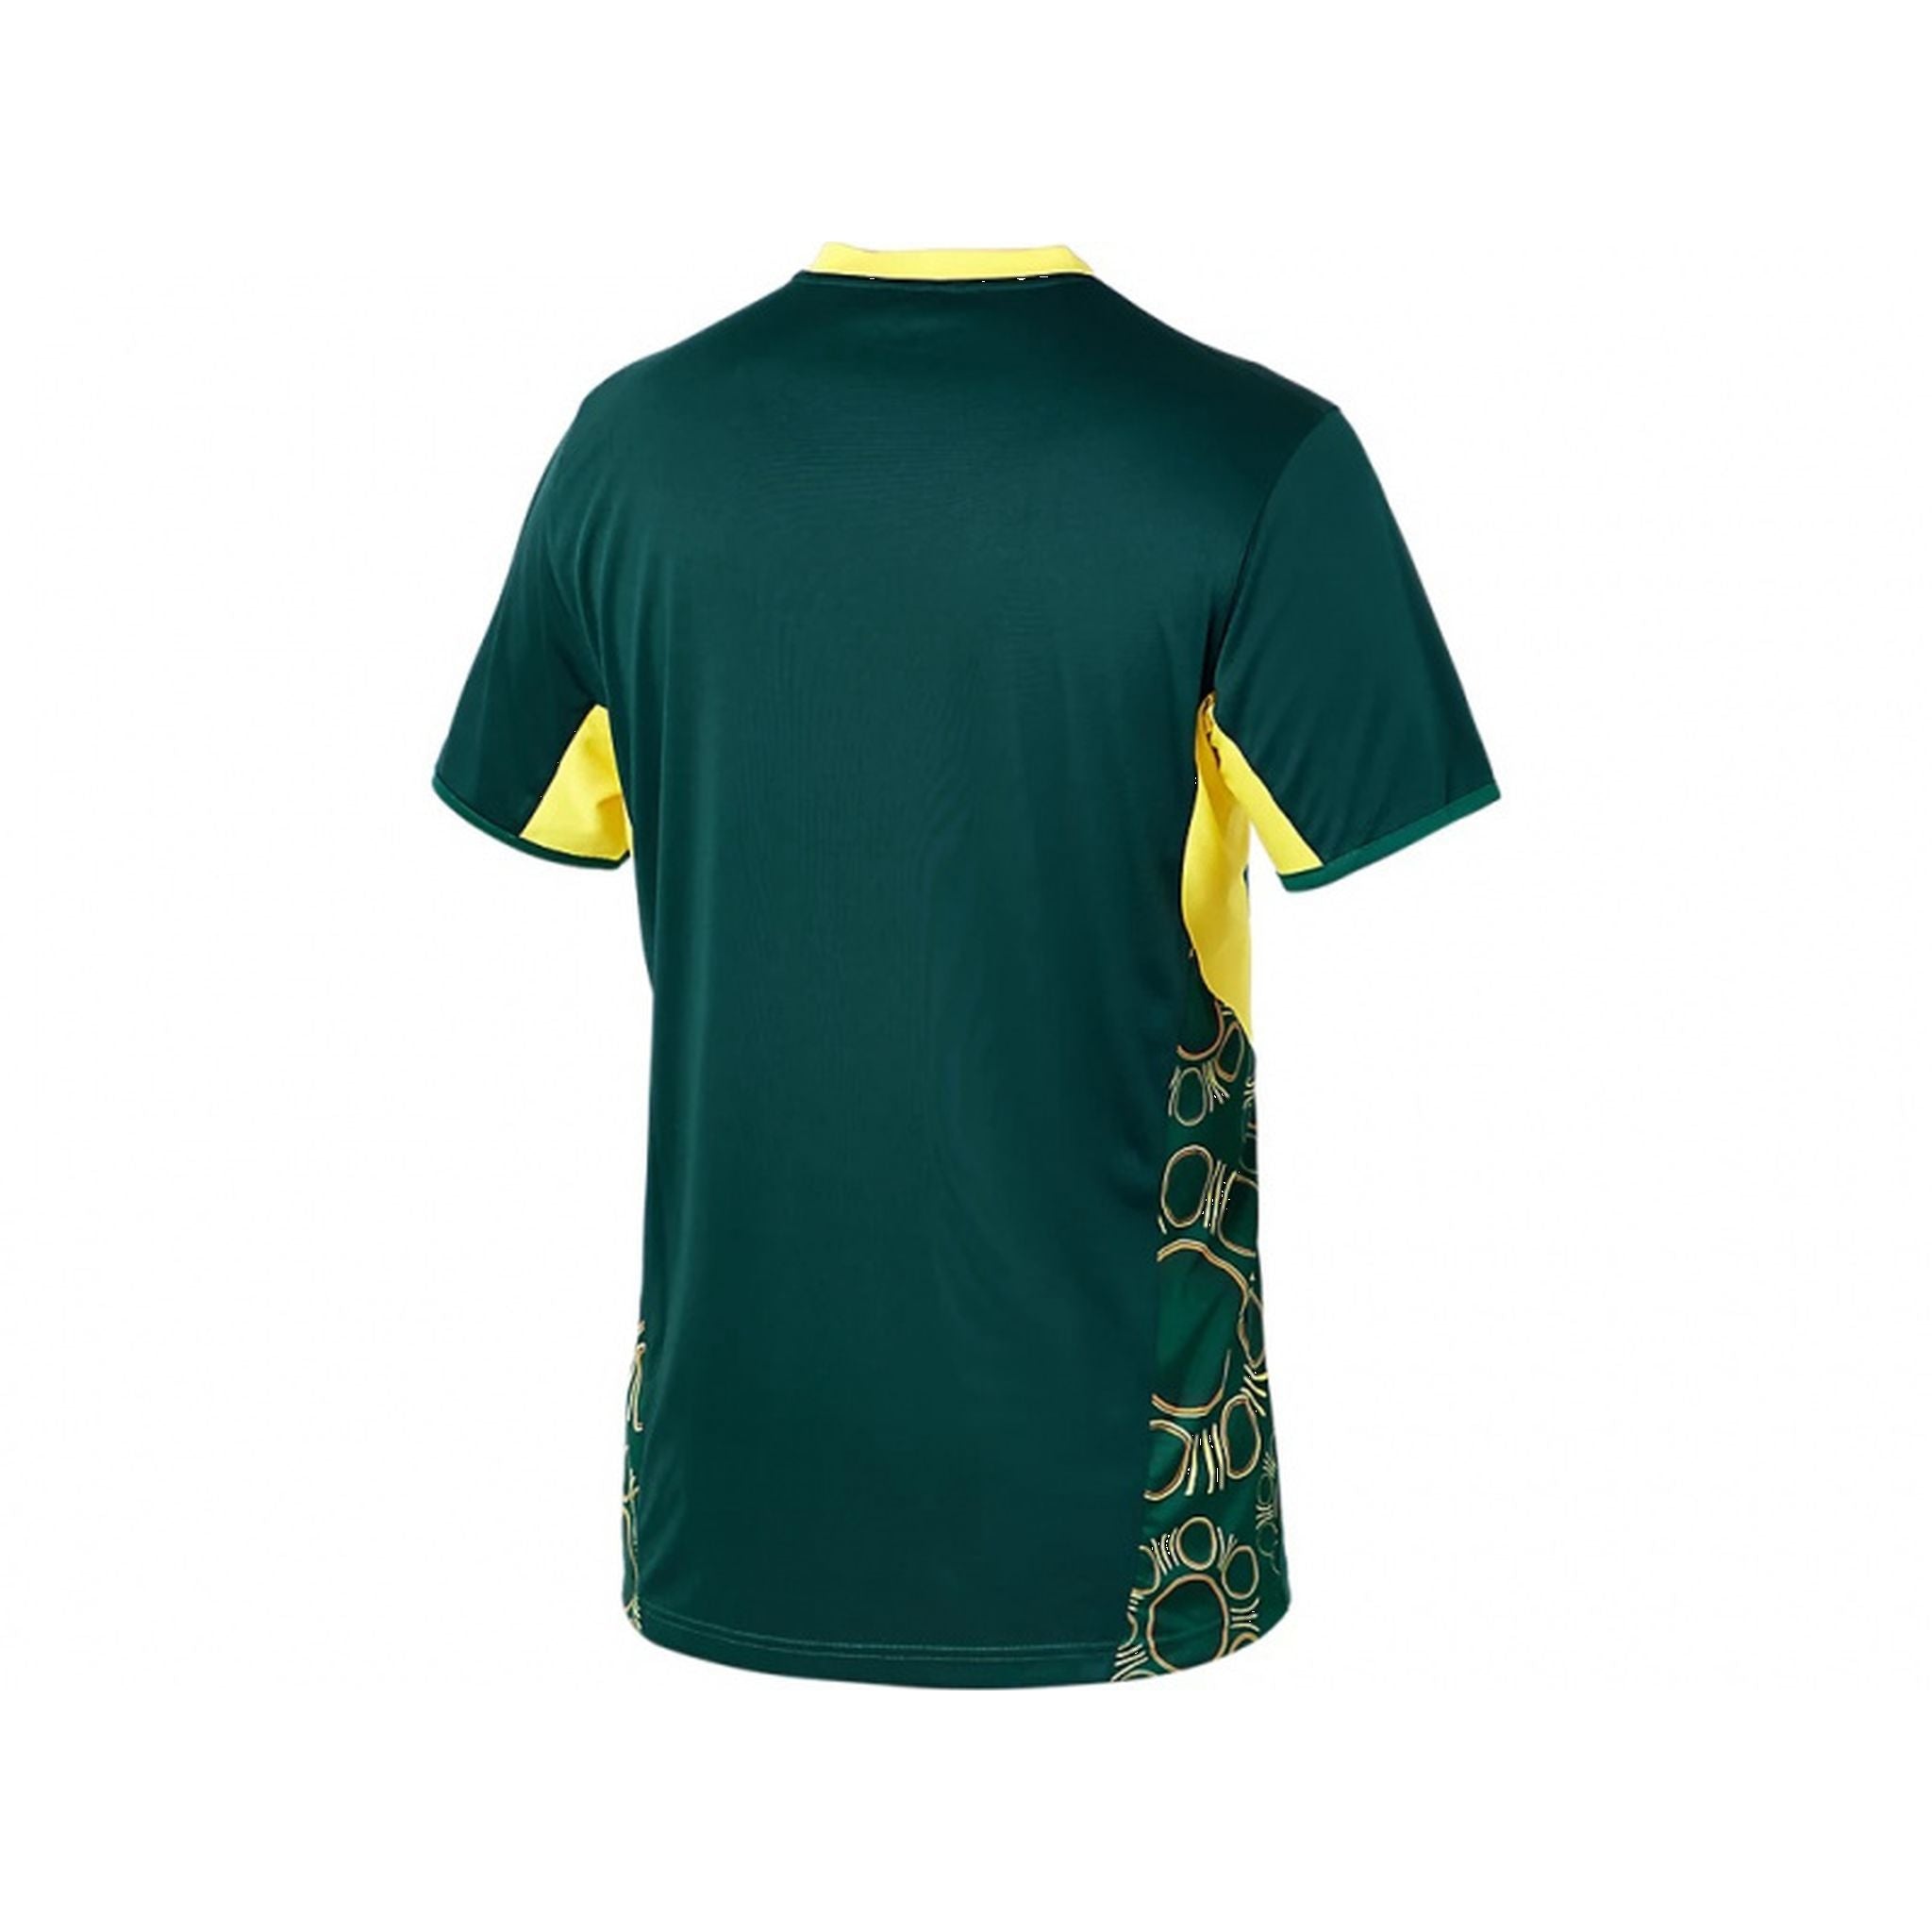 ASICS Cricket Australia Adult Replica T20 Shirt